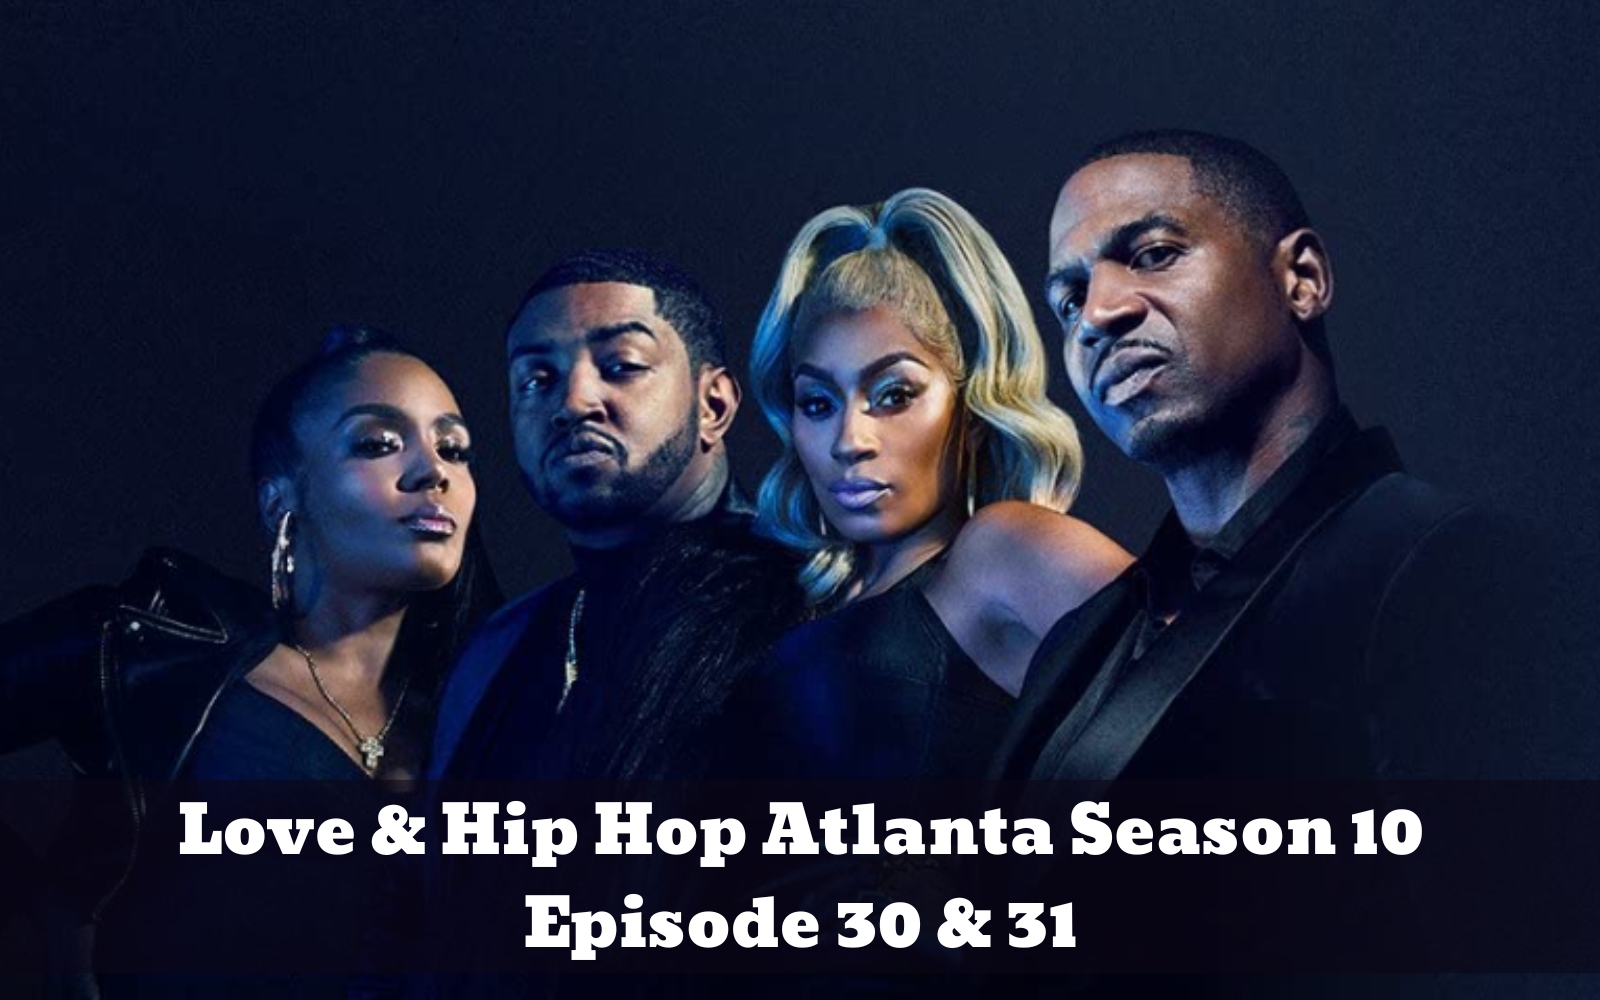 Love & Hip Hop Atlanta Season 10 Episode 30 & 31